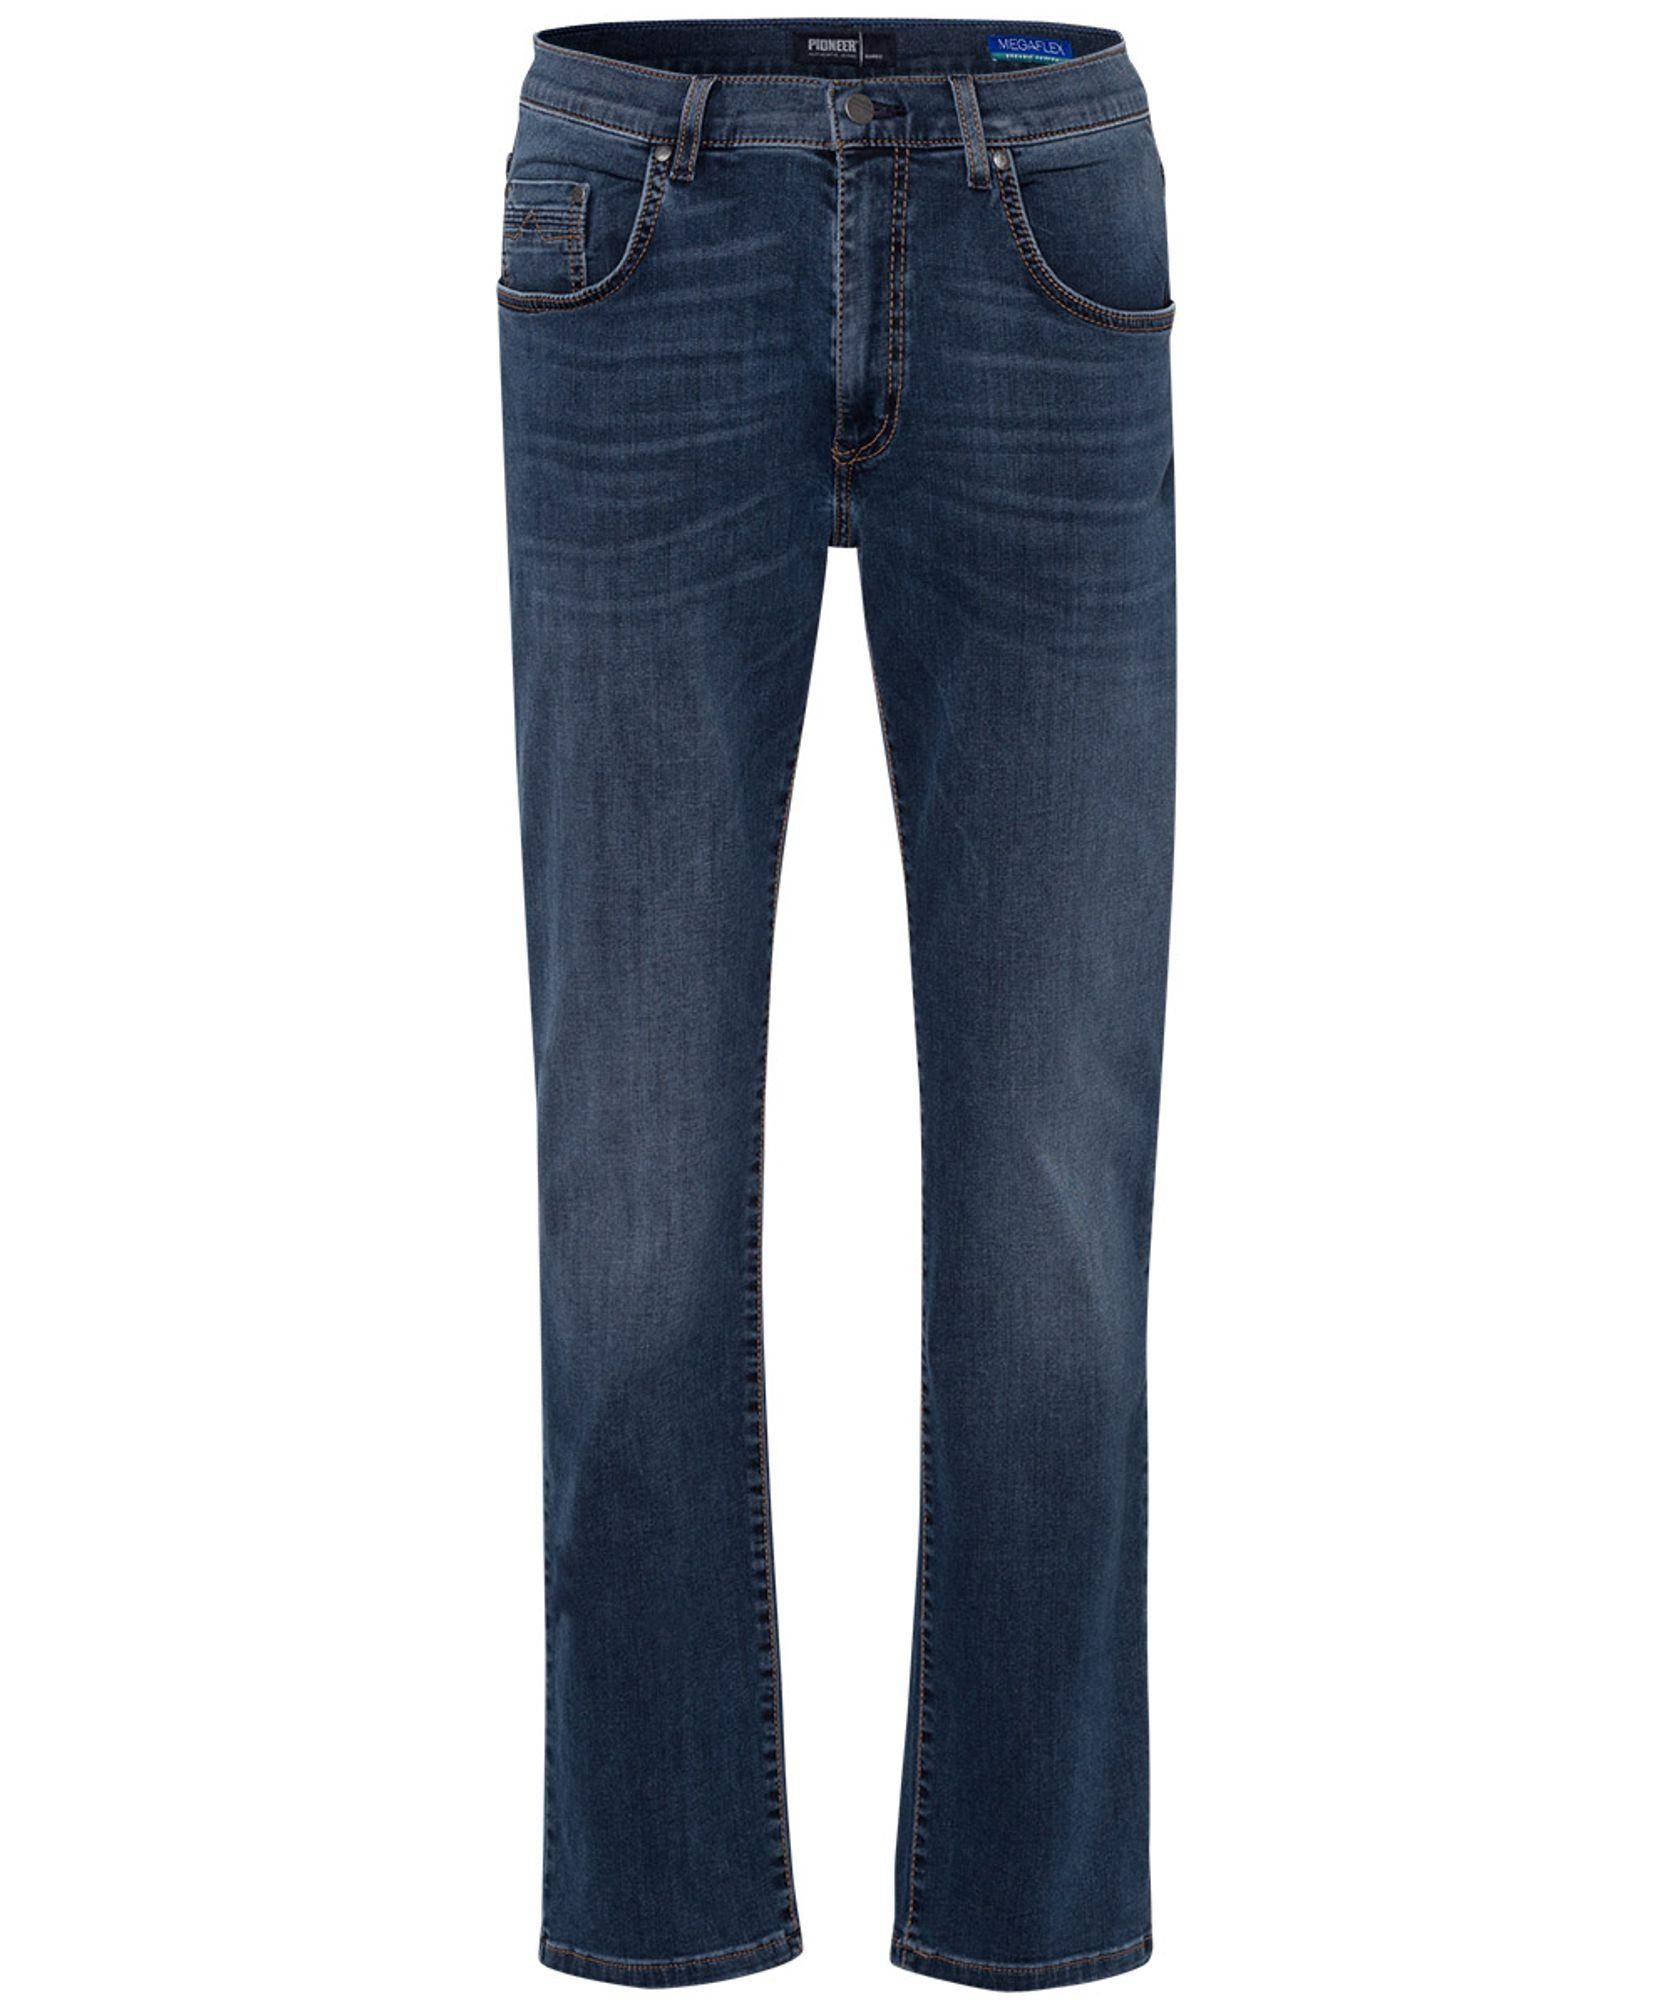 Ganz neu AUS! Pioneer Authentic Jeans 5-Pocket-Jeans 16741.6688 Stretch PO